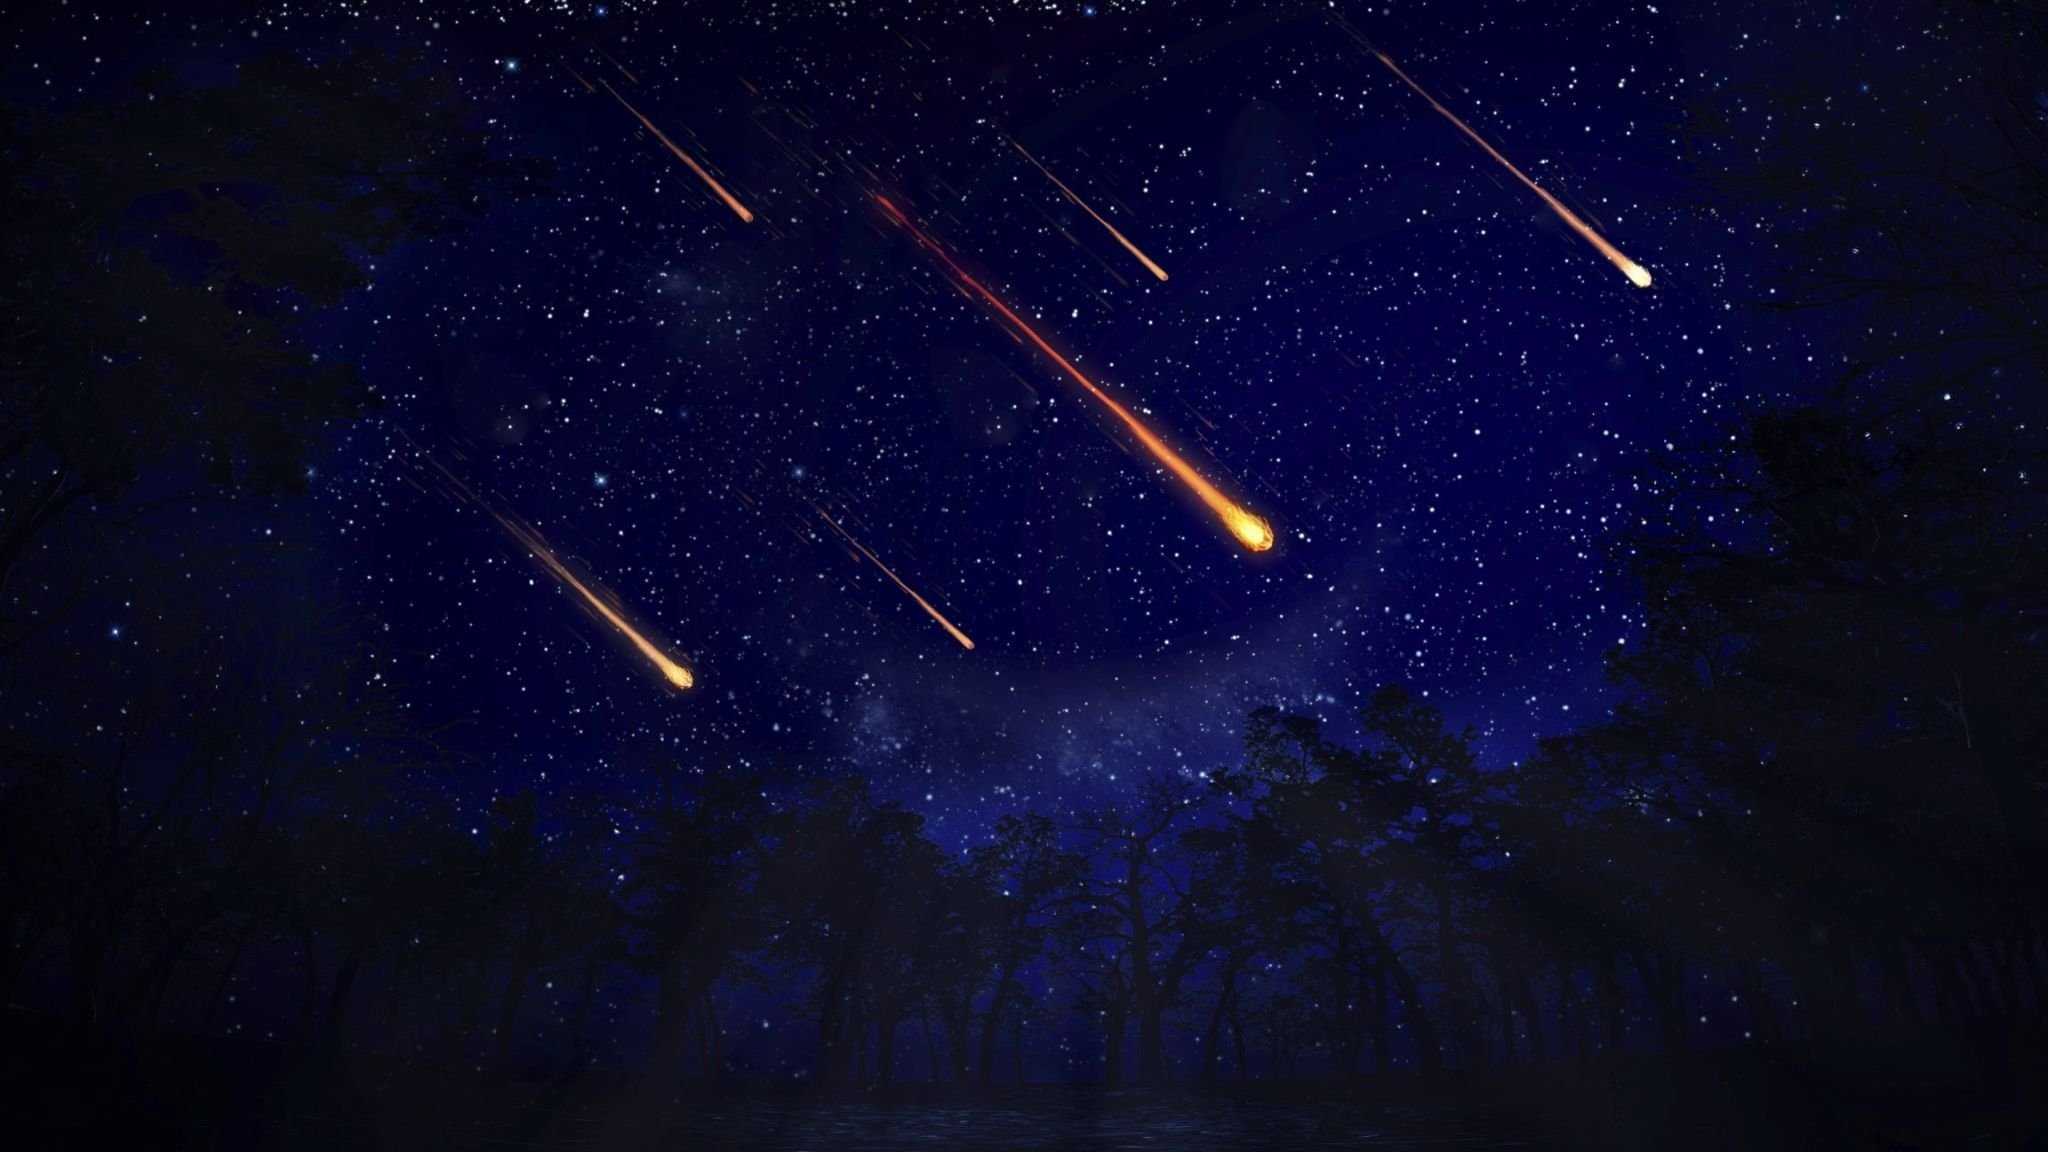 Falling meteorites